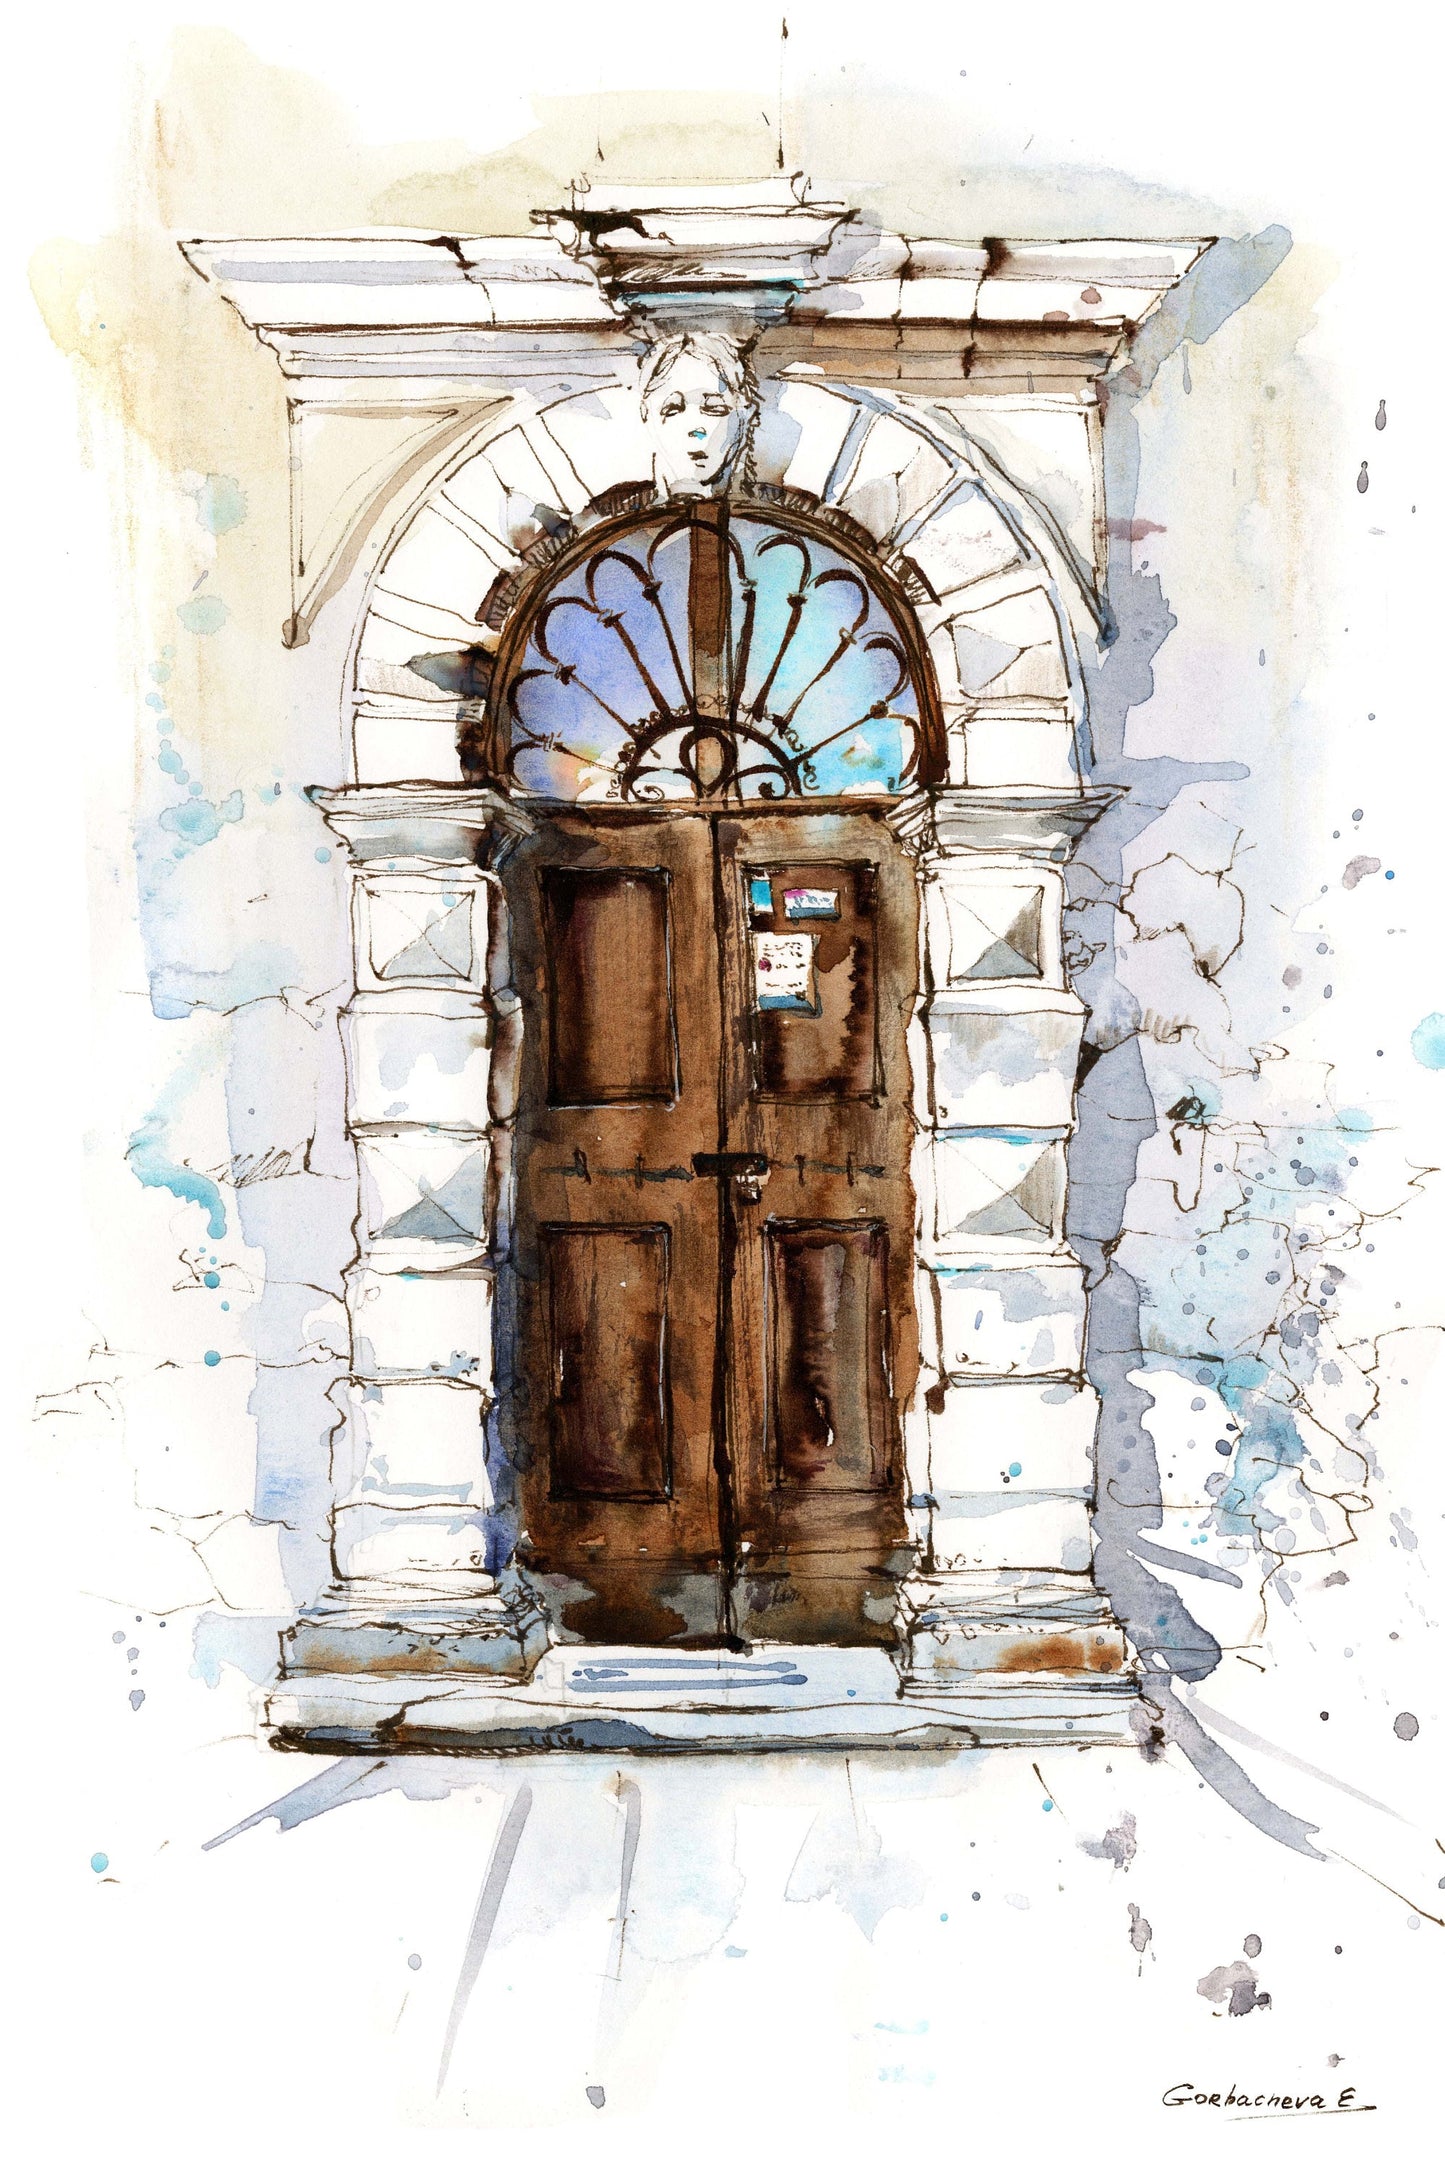 Antique Door Art Print, Old City Street, Watercolor Sketch, Architecture Painting, Brown, Croatia, Porec Wall Decor